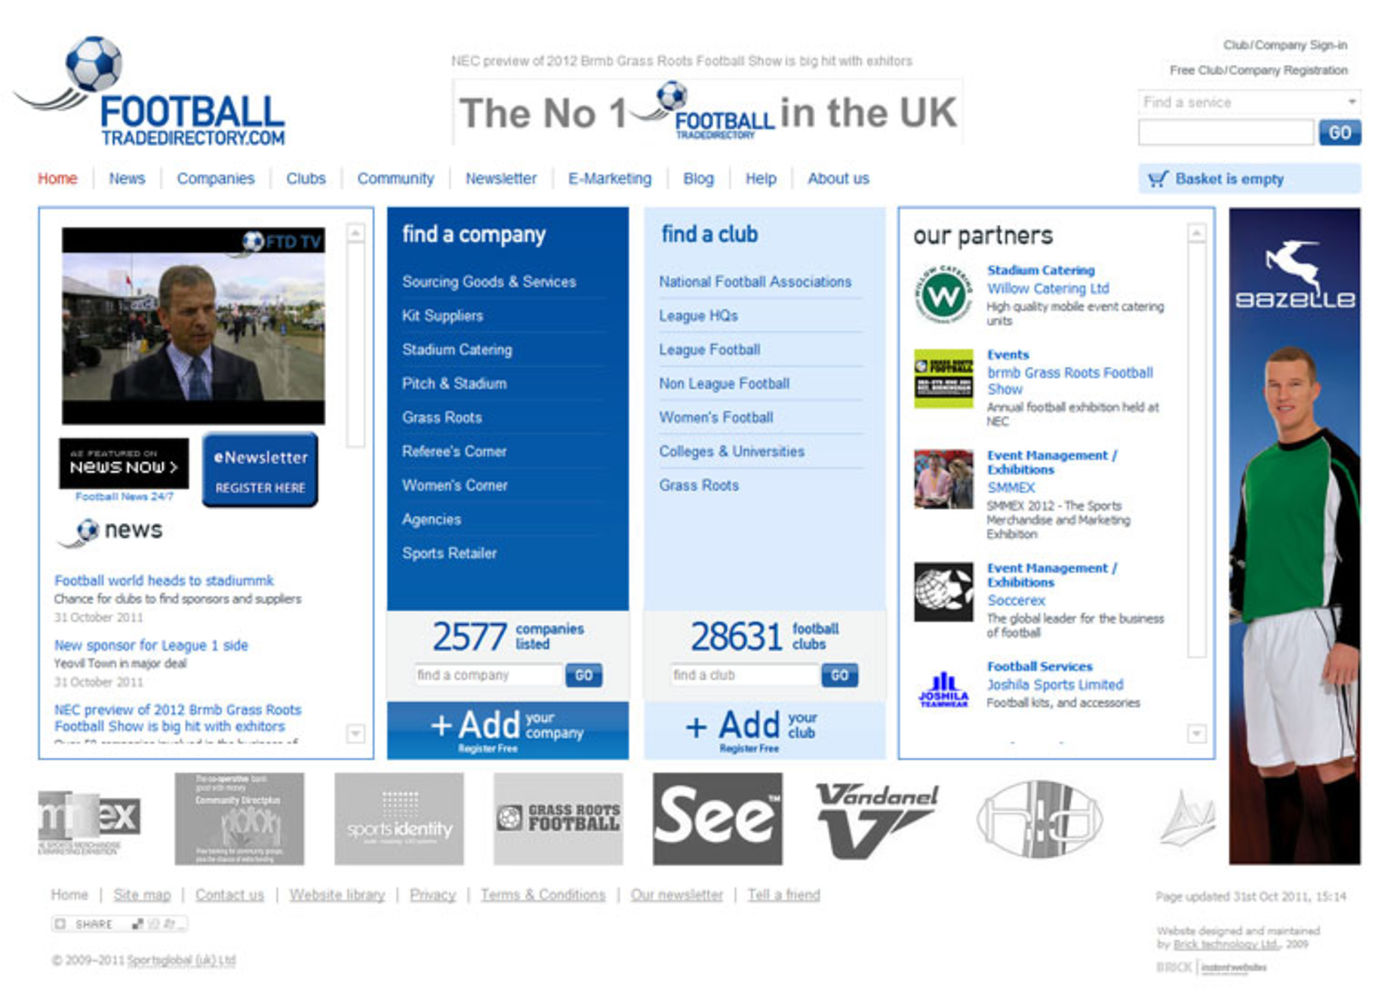 Football Trade Directory (2009) Homepage